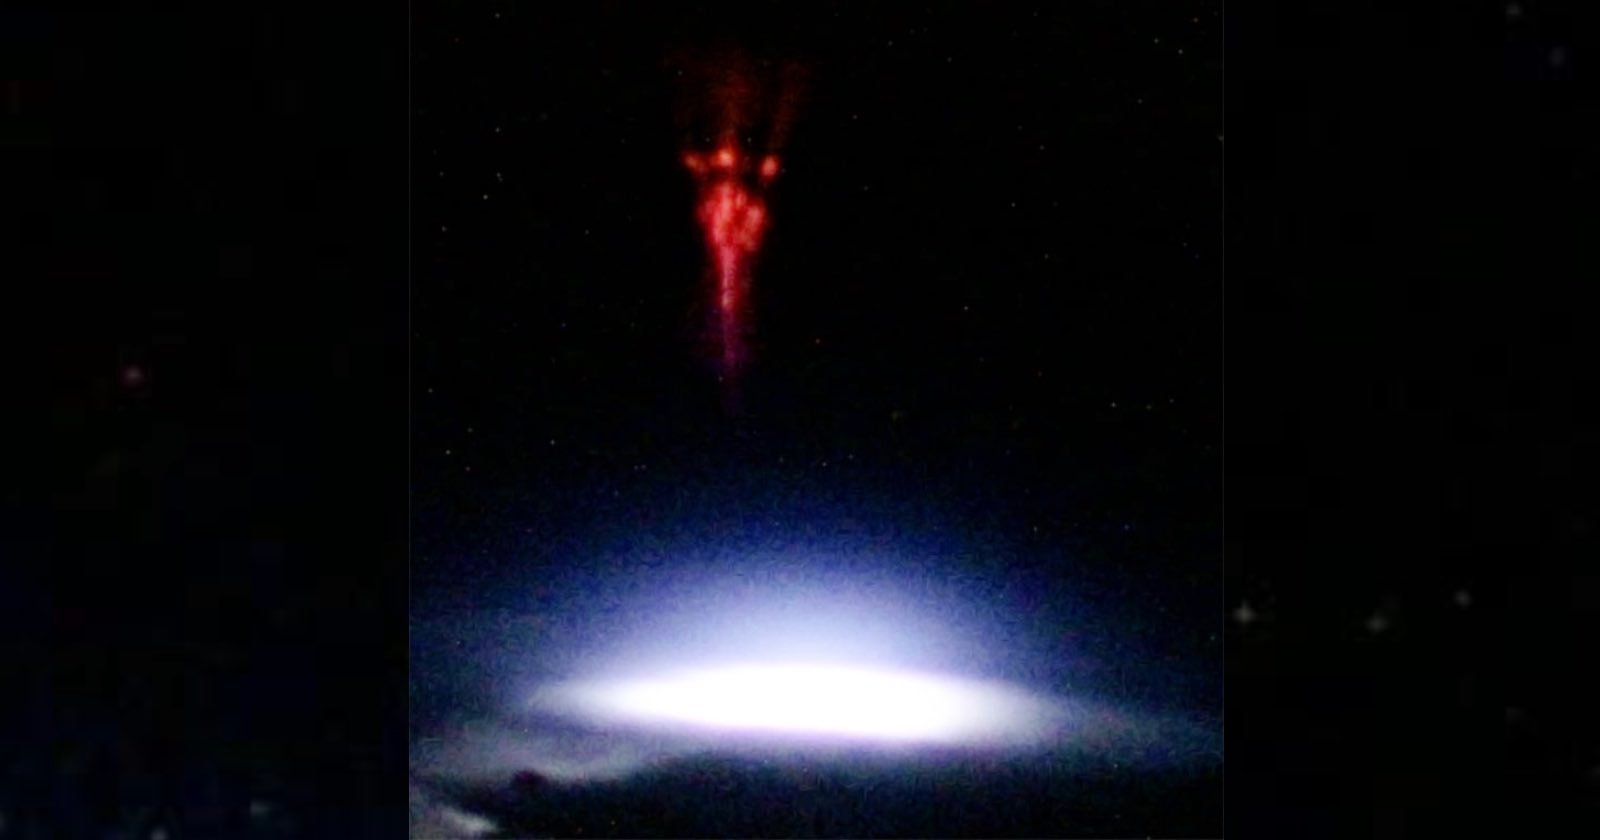  astronaut captures image elusive red sprite high above 